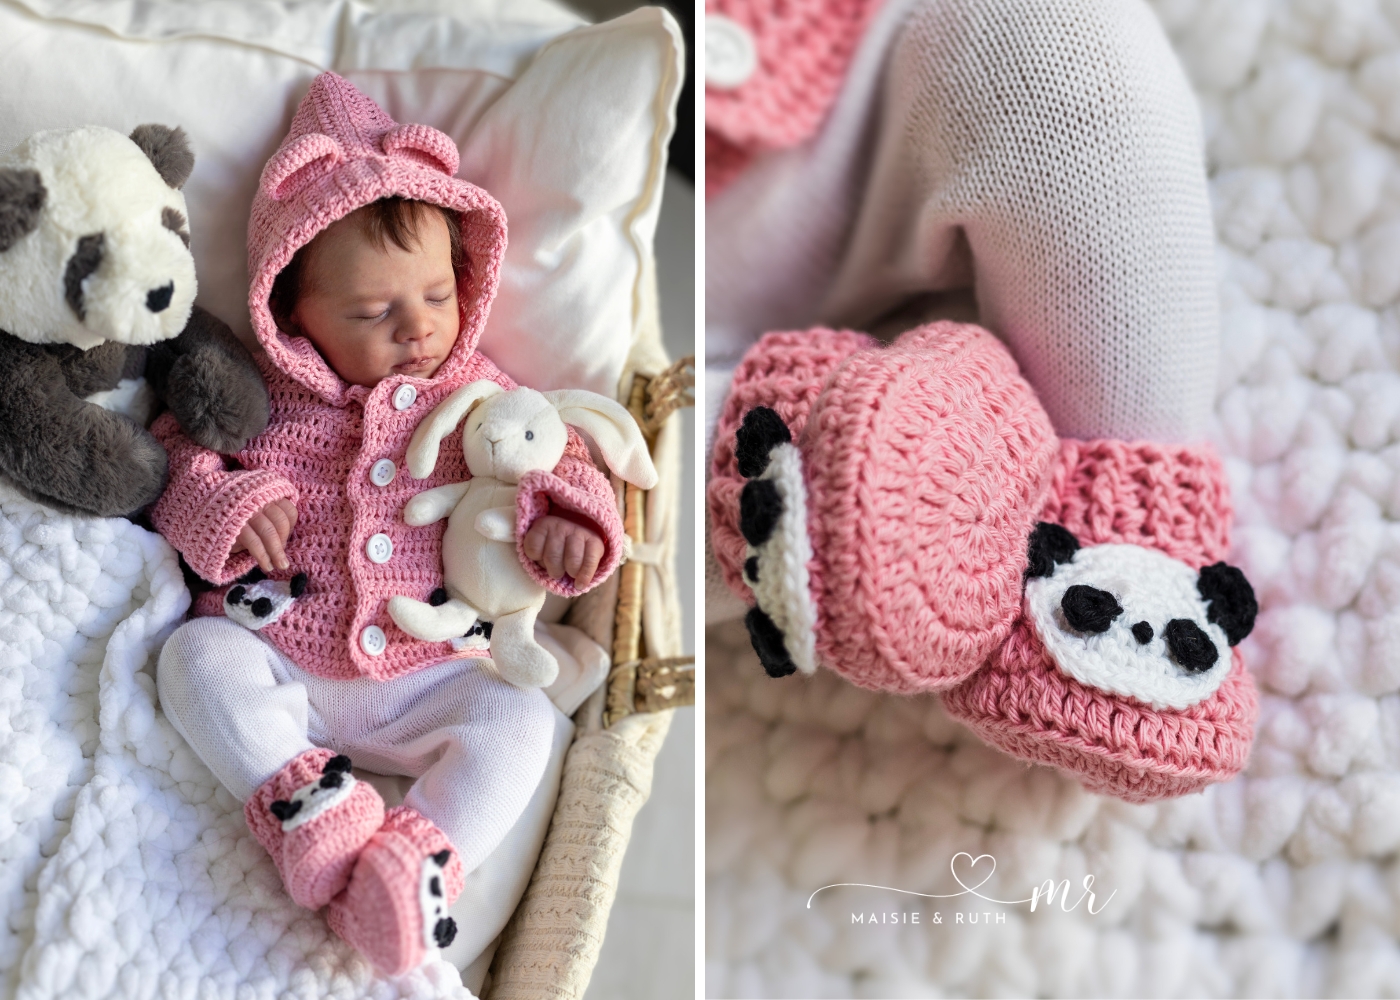 Panda Crochet Baby Booties in pink on sleeping baby